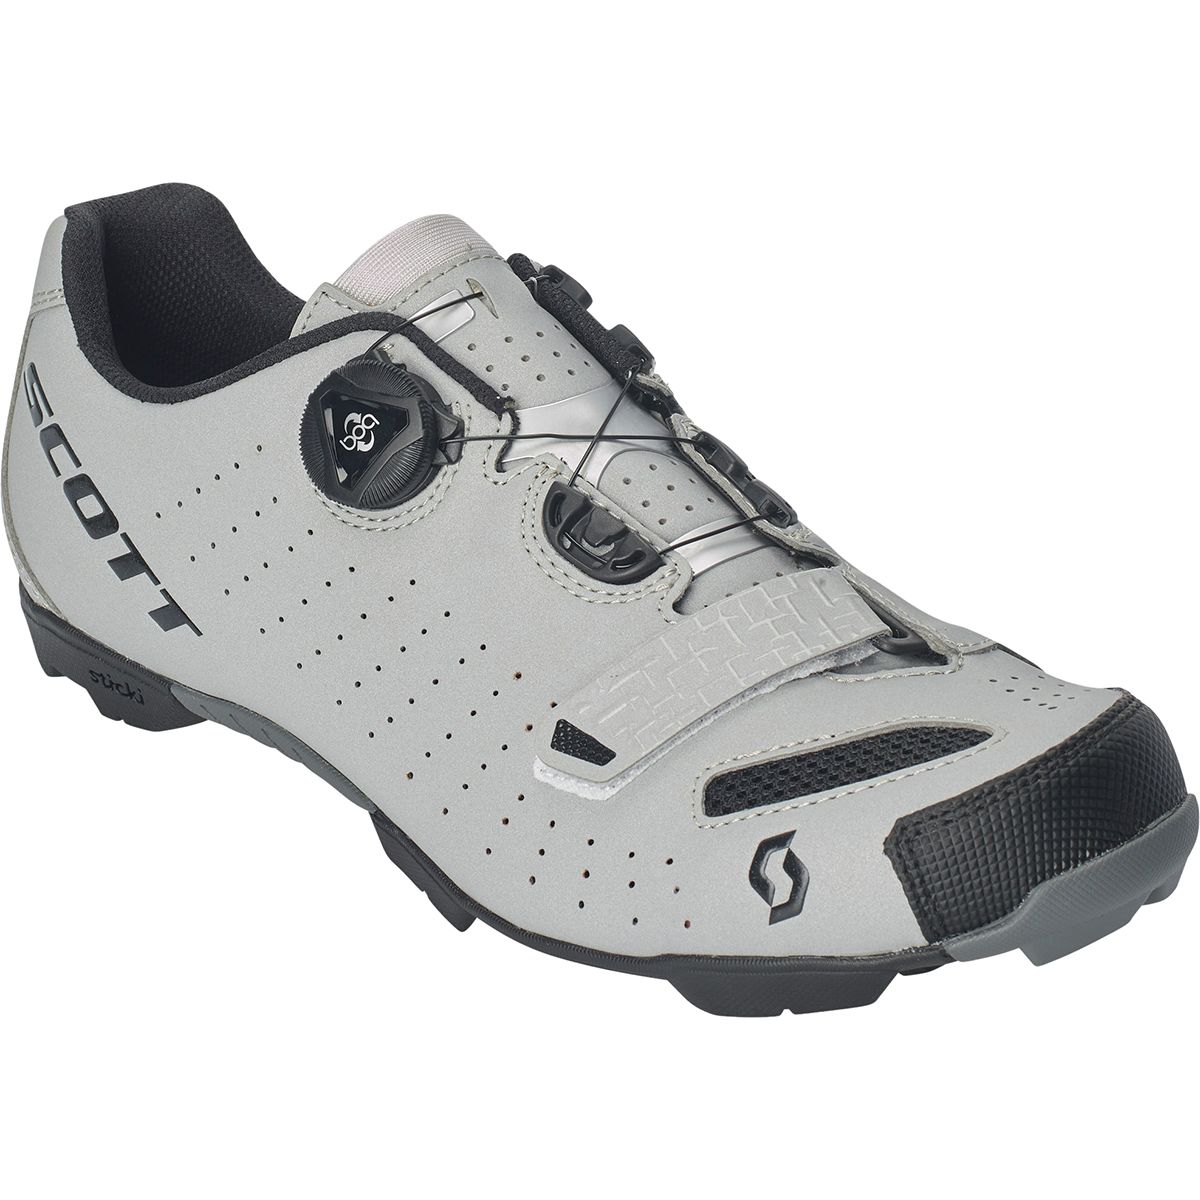 Scott MTB Comp Boa Reflective Cycling Shoe - Men's